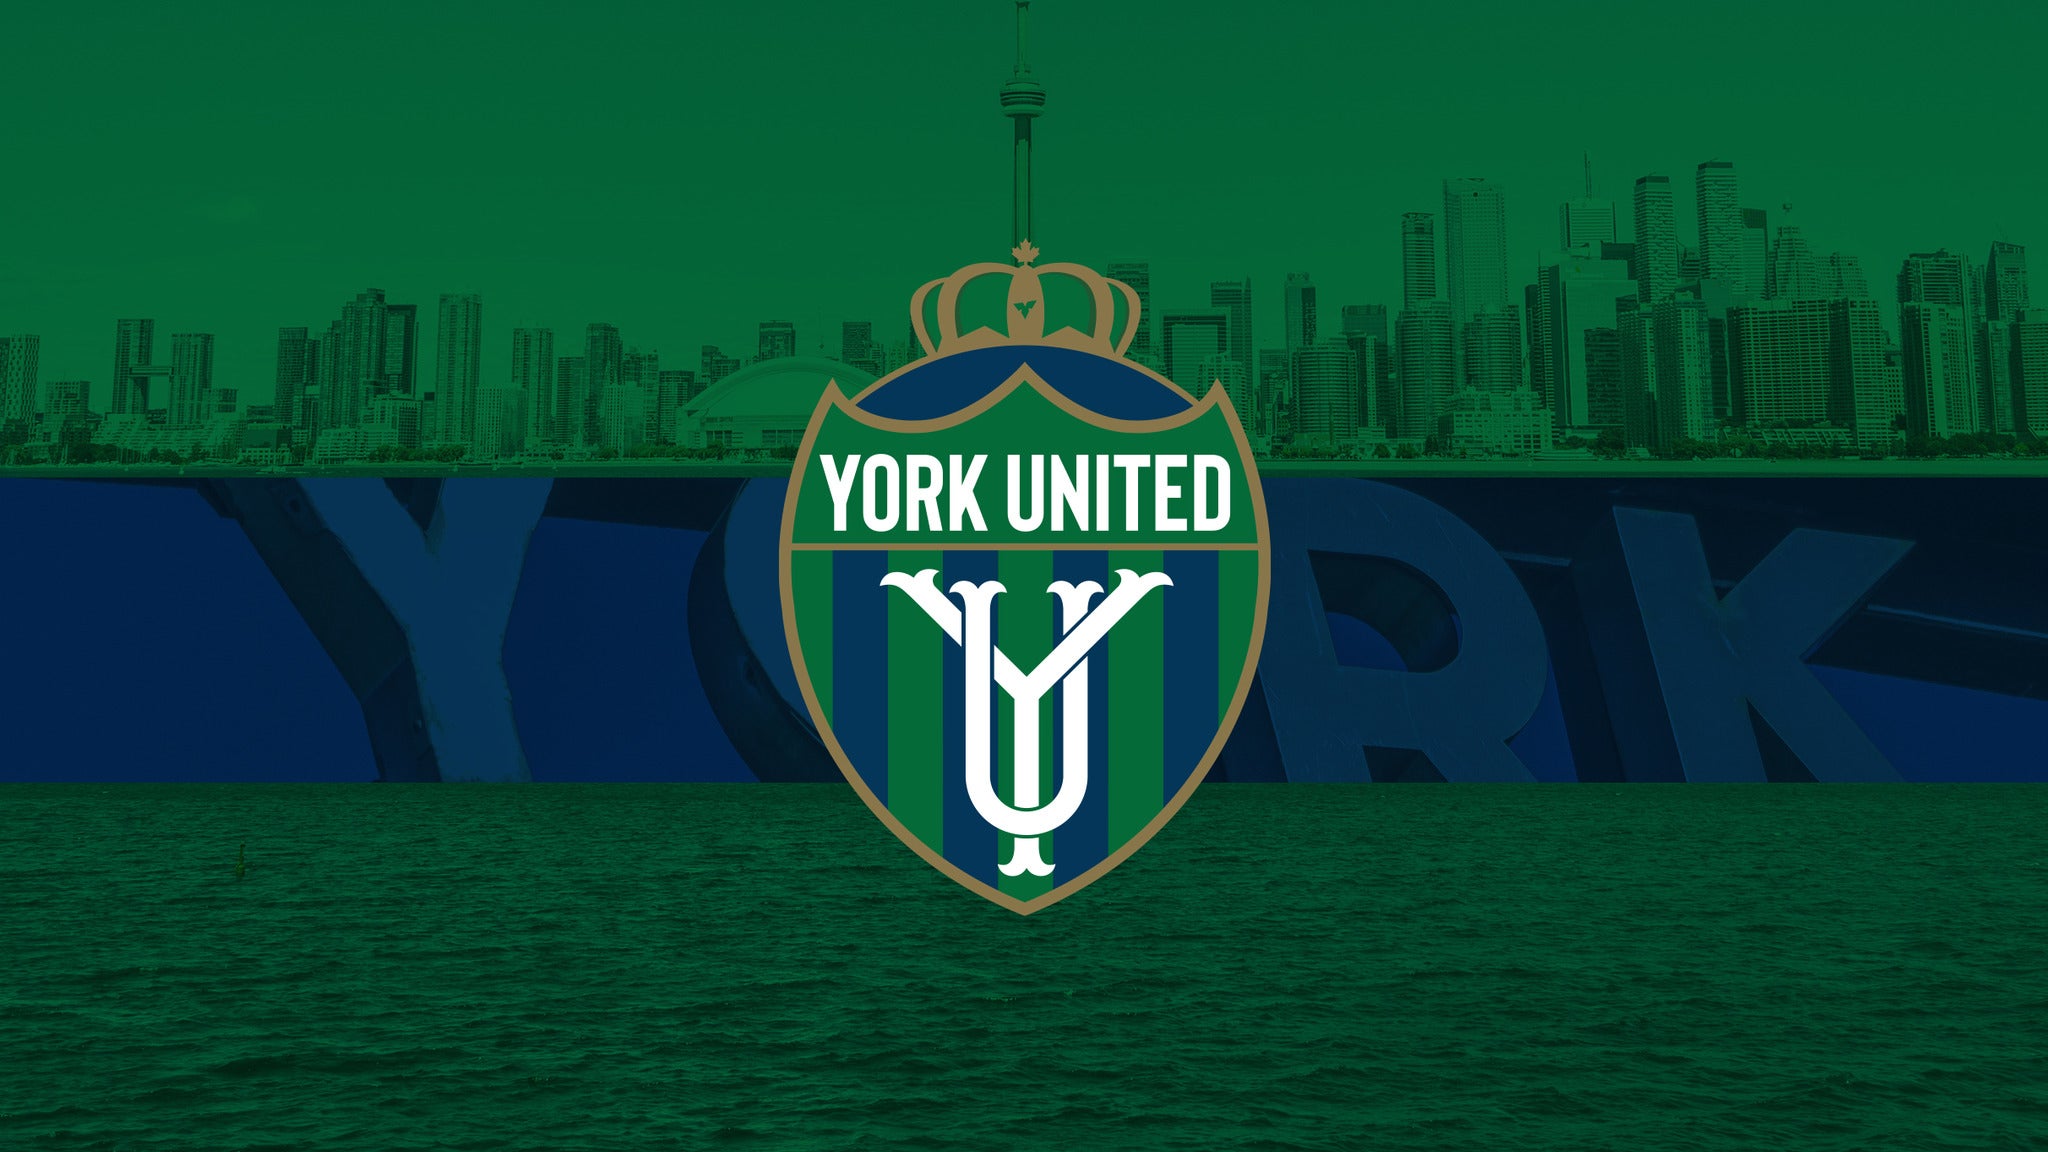 York United FC vs. Valour FC in Toronto promo photo for Members presale offer code